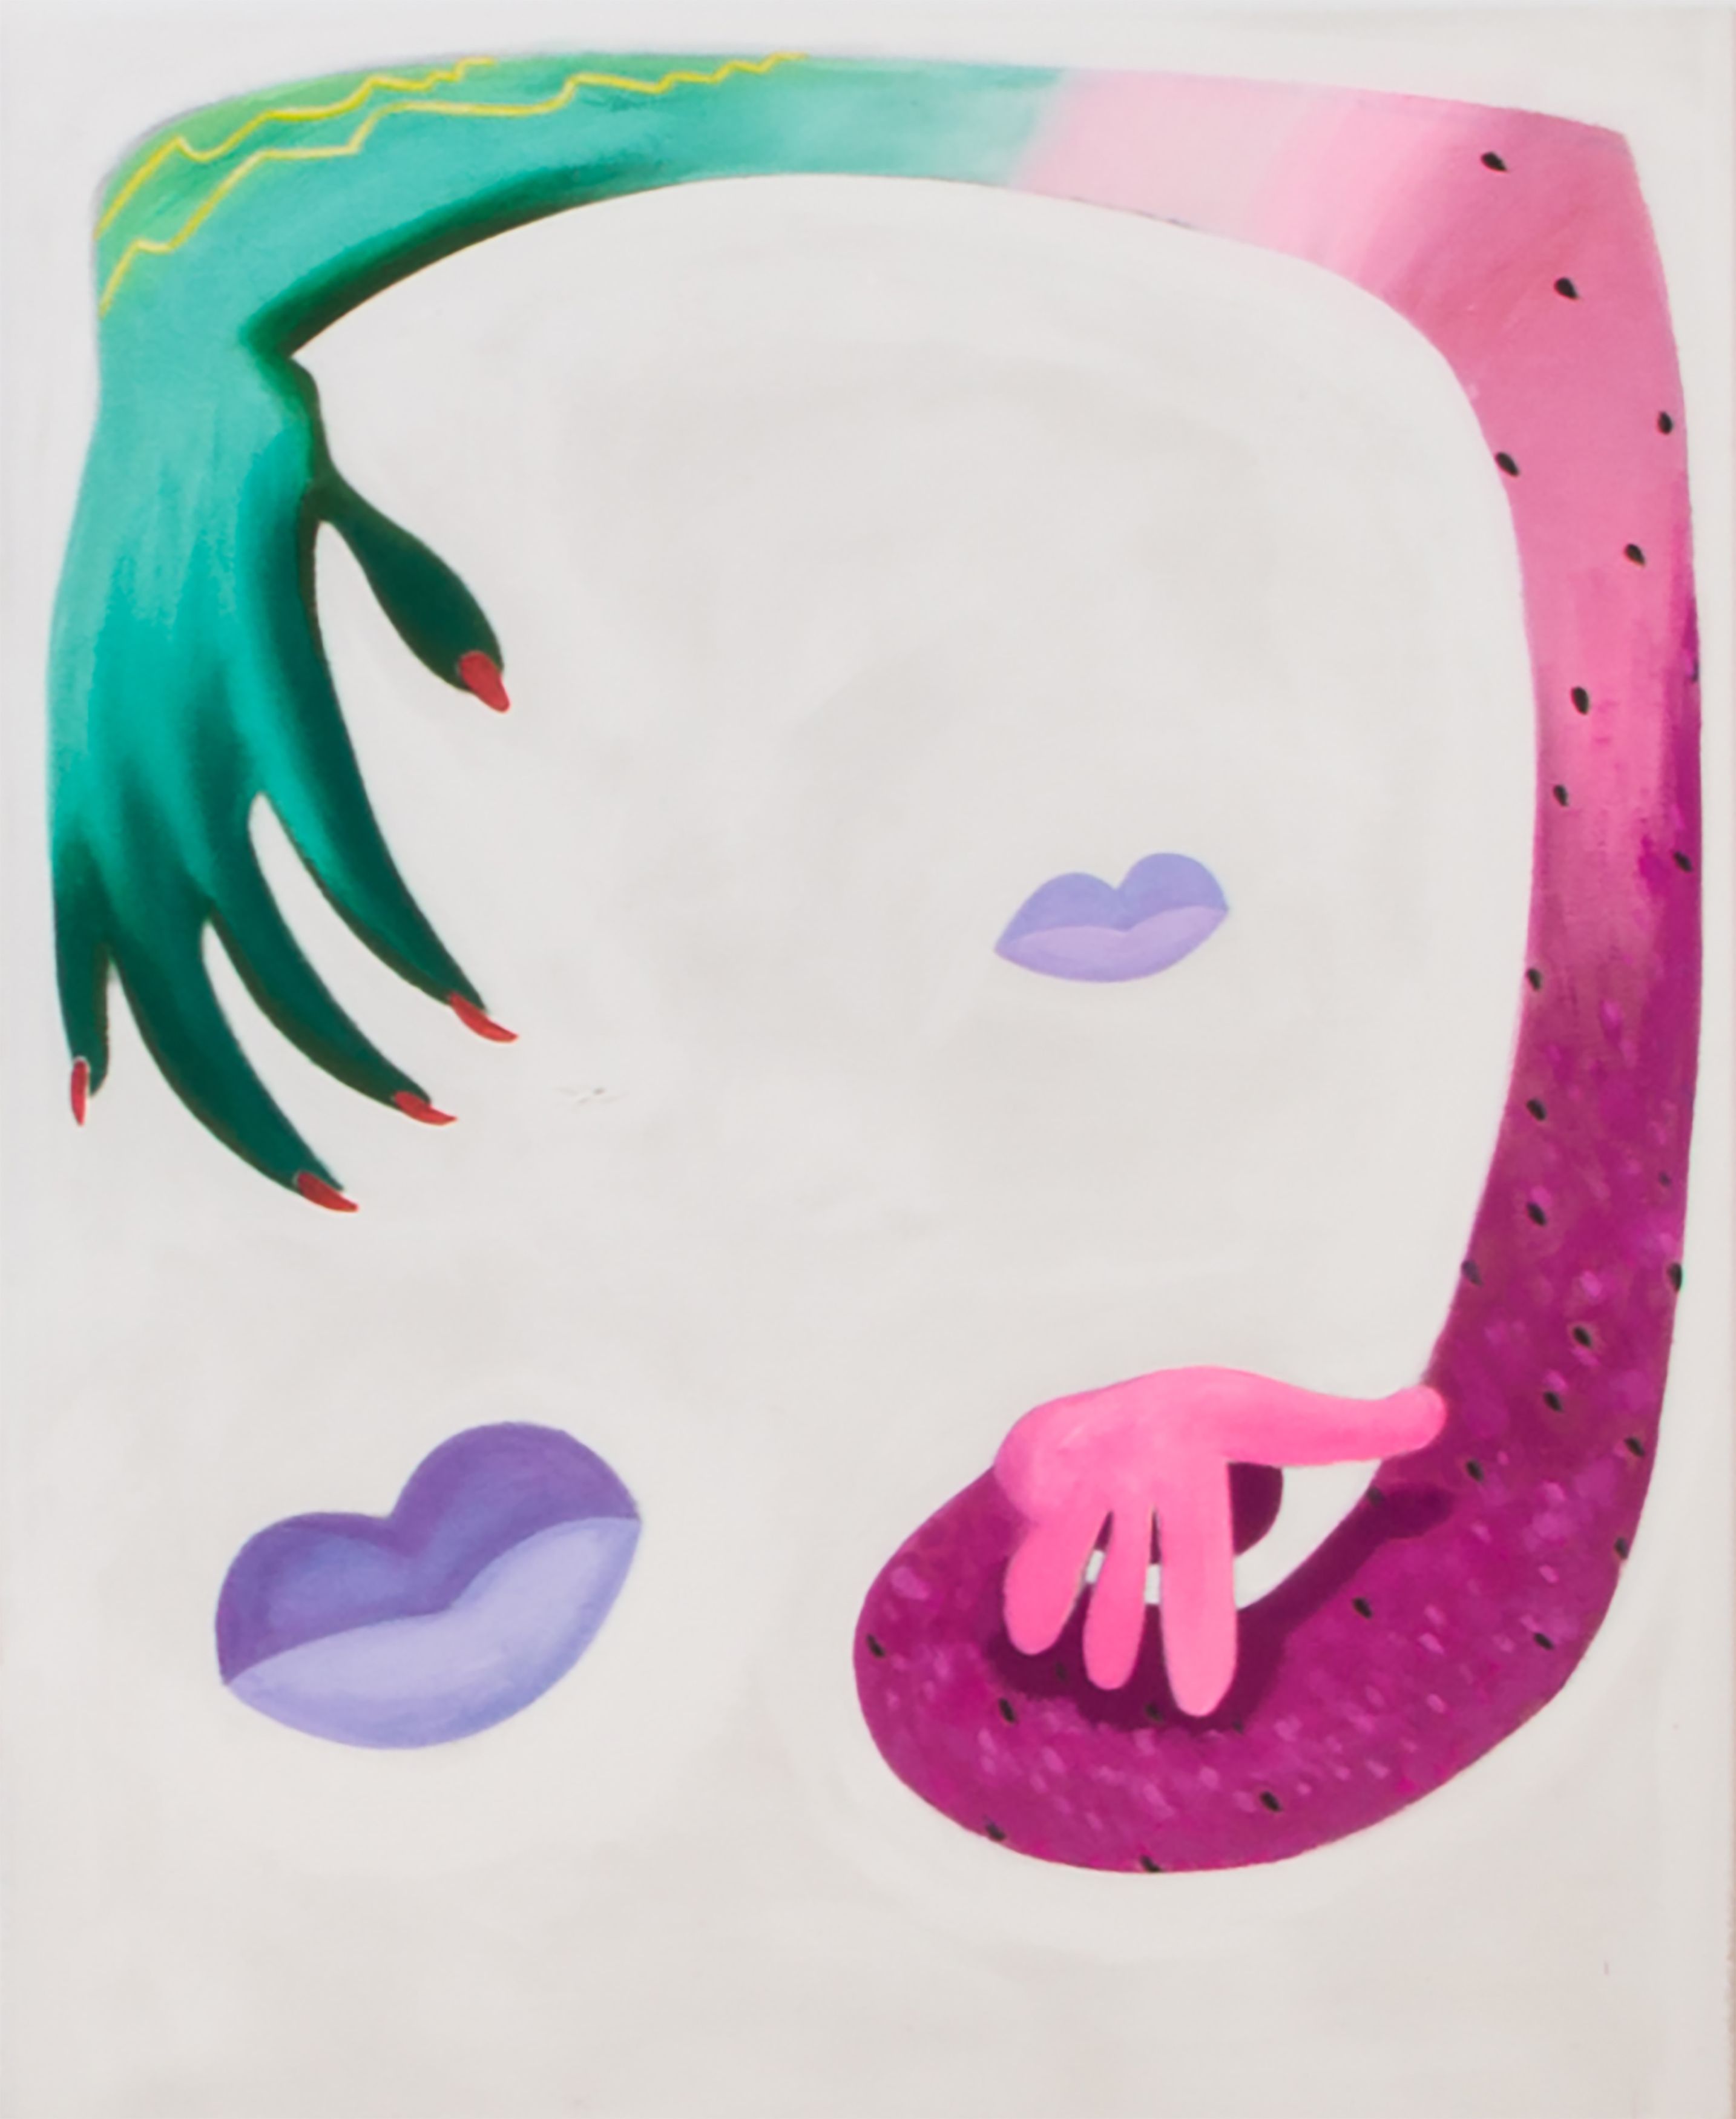 Chelsea Culprit, Watermelon Crawl, 2016, acrylic, crayon, graphite, oil, oil pastel, 60 x 45 3/4 in.